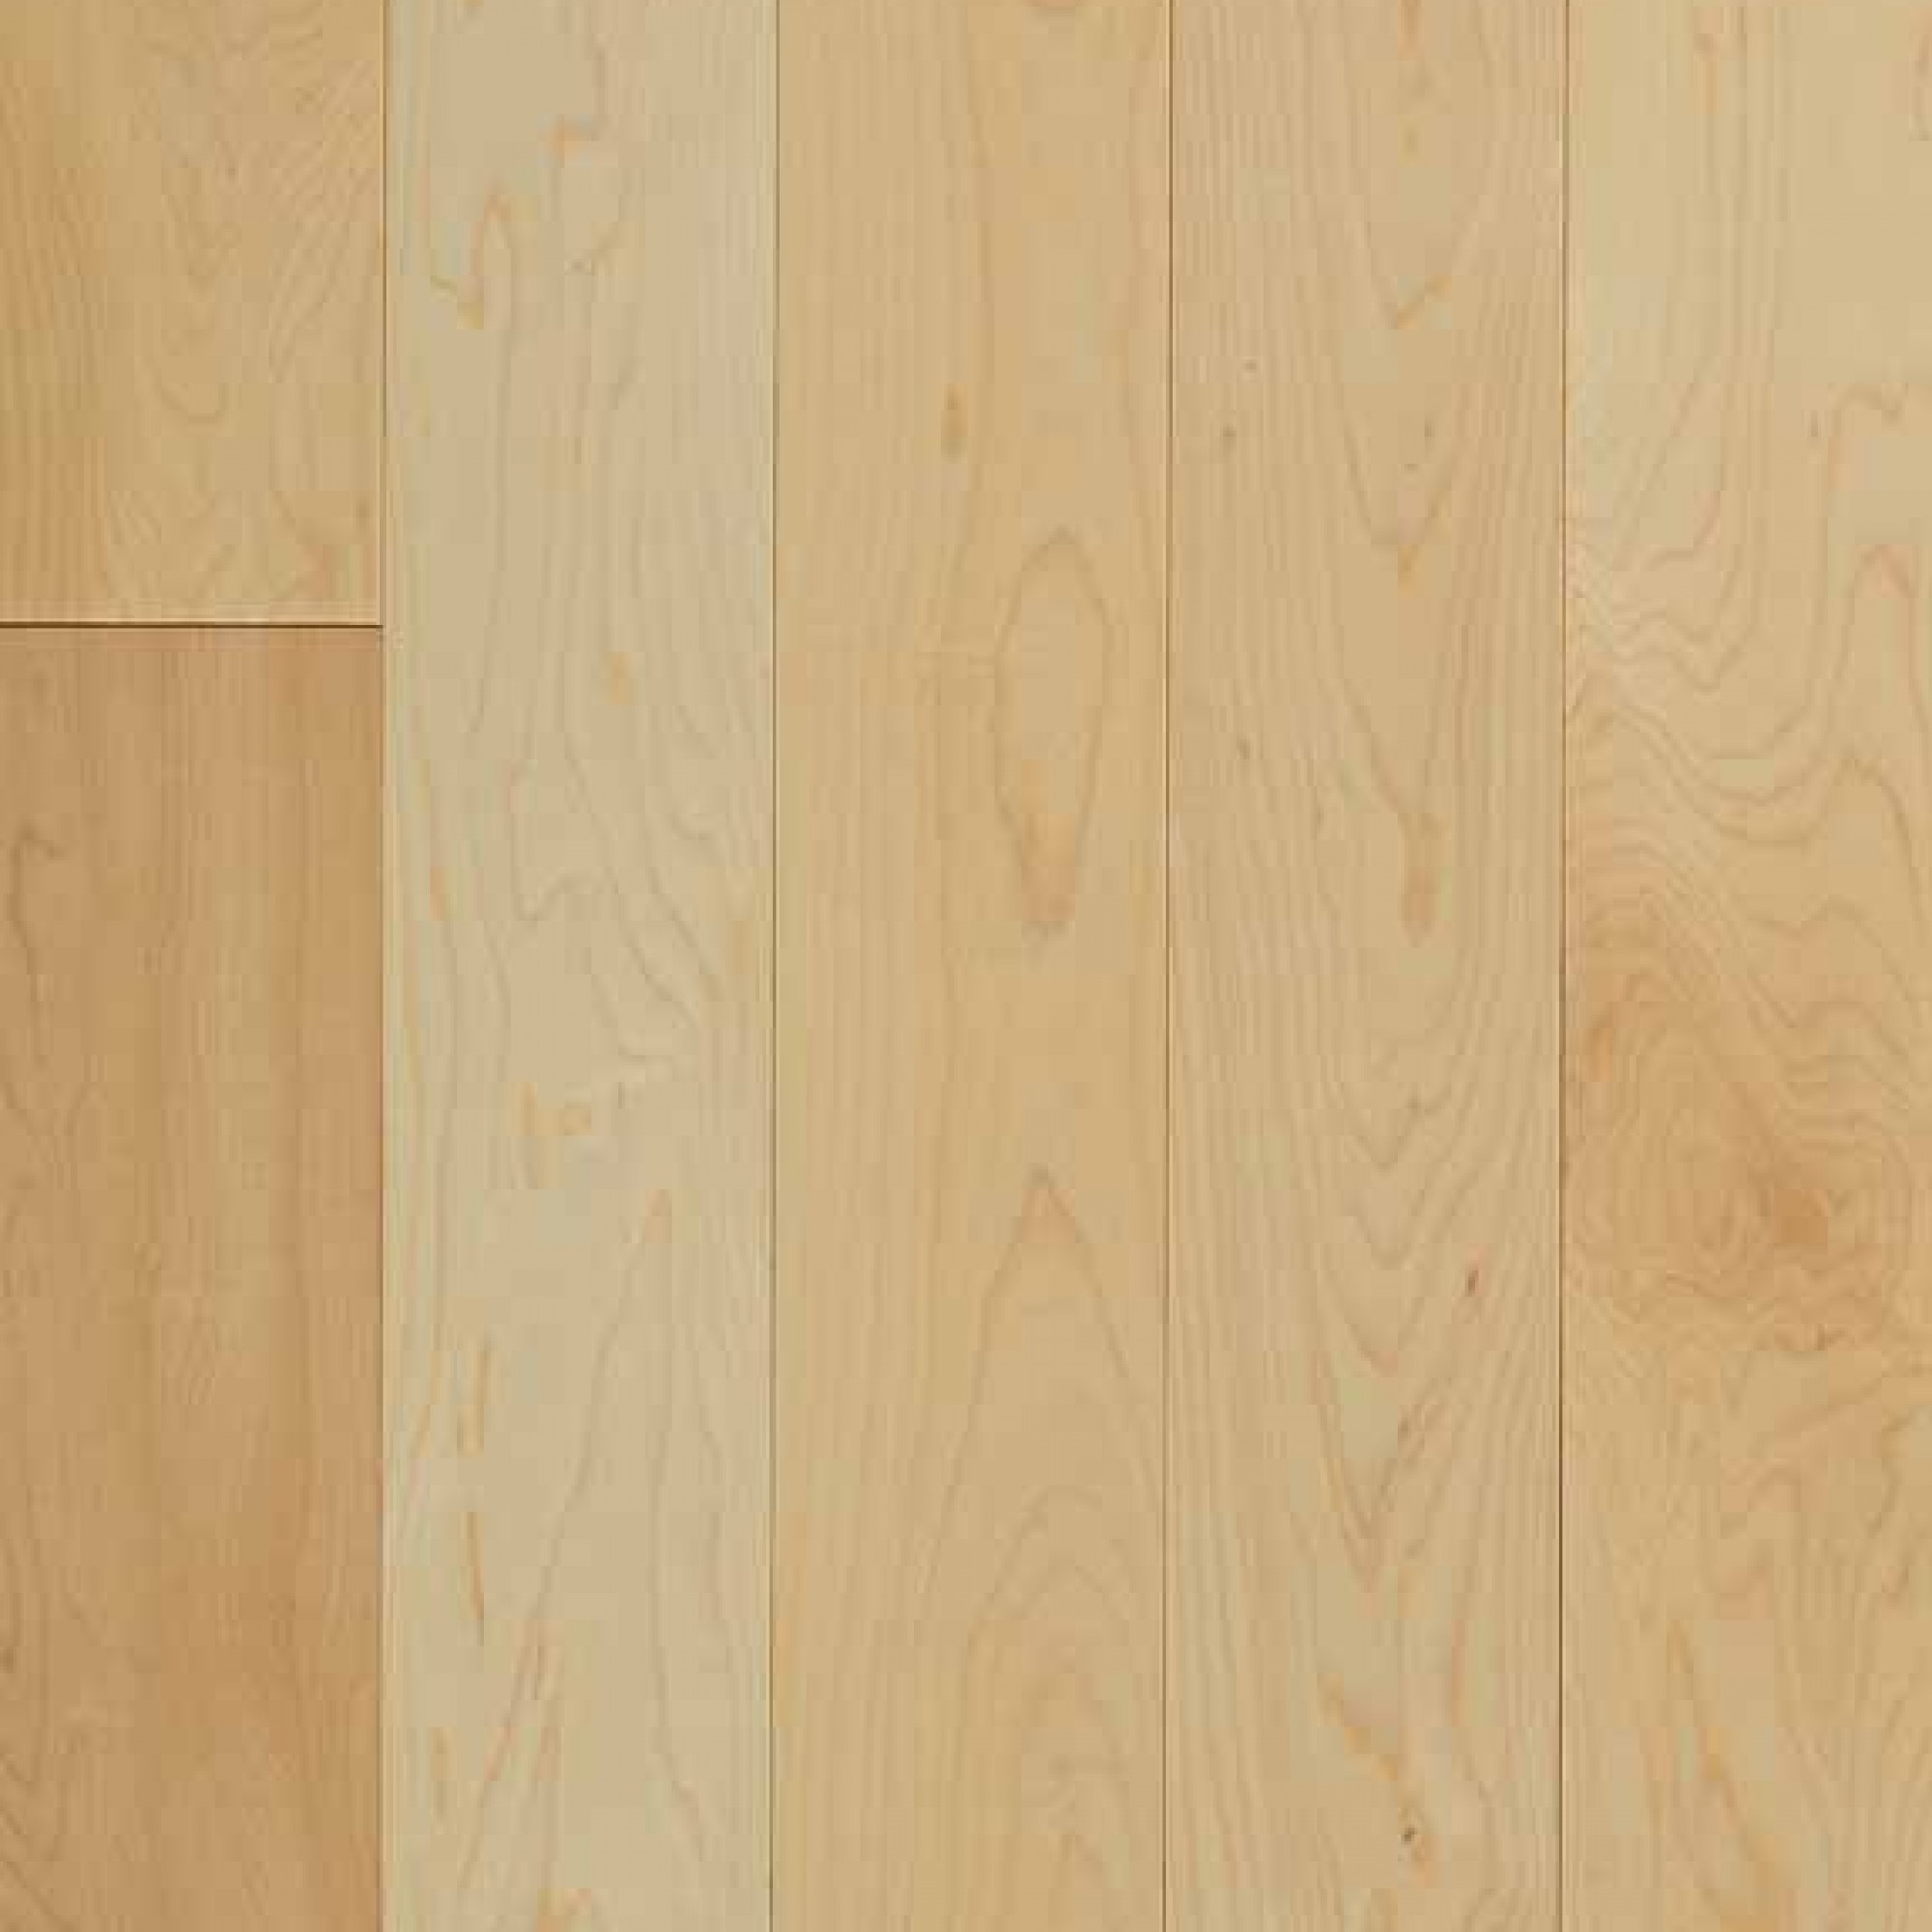 Smooth Maple Natural Vintage Hardwood Flooring And Engineered